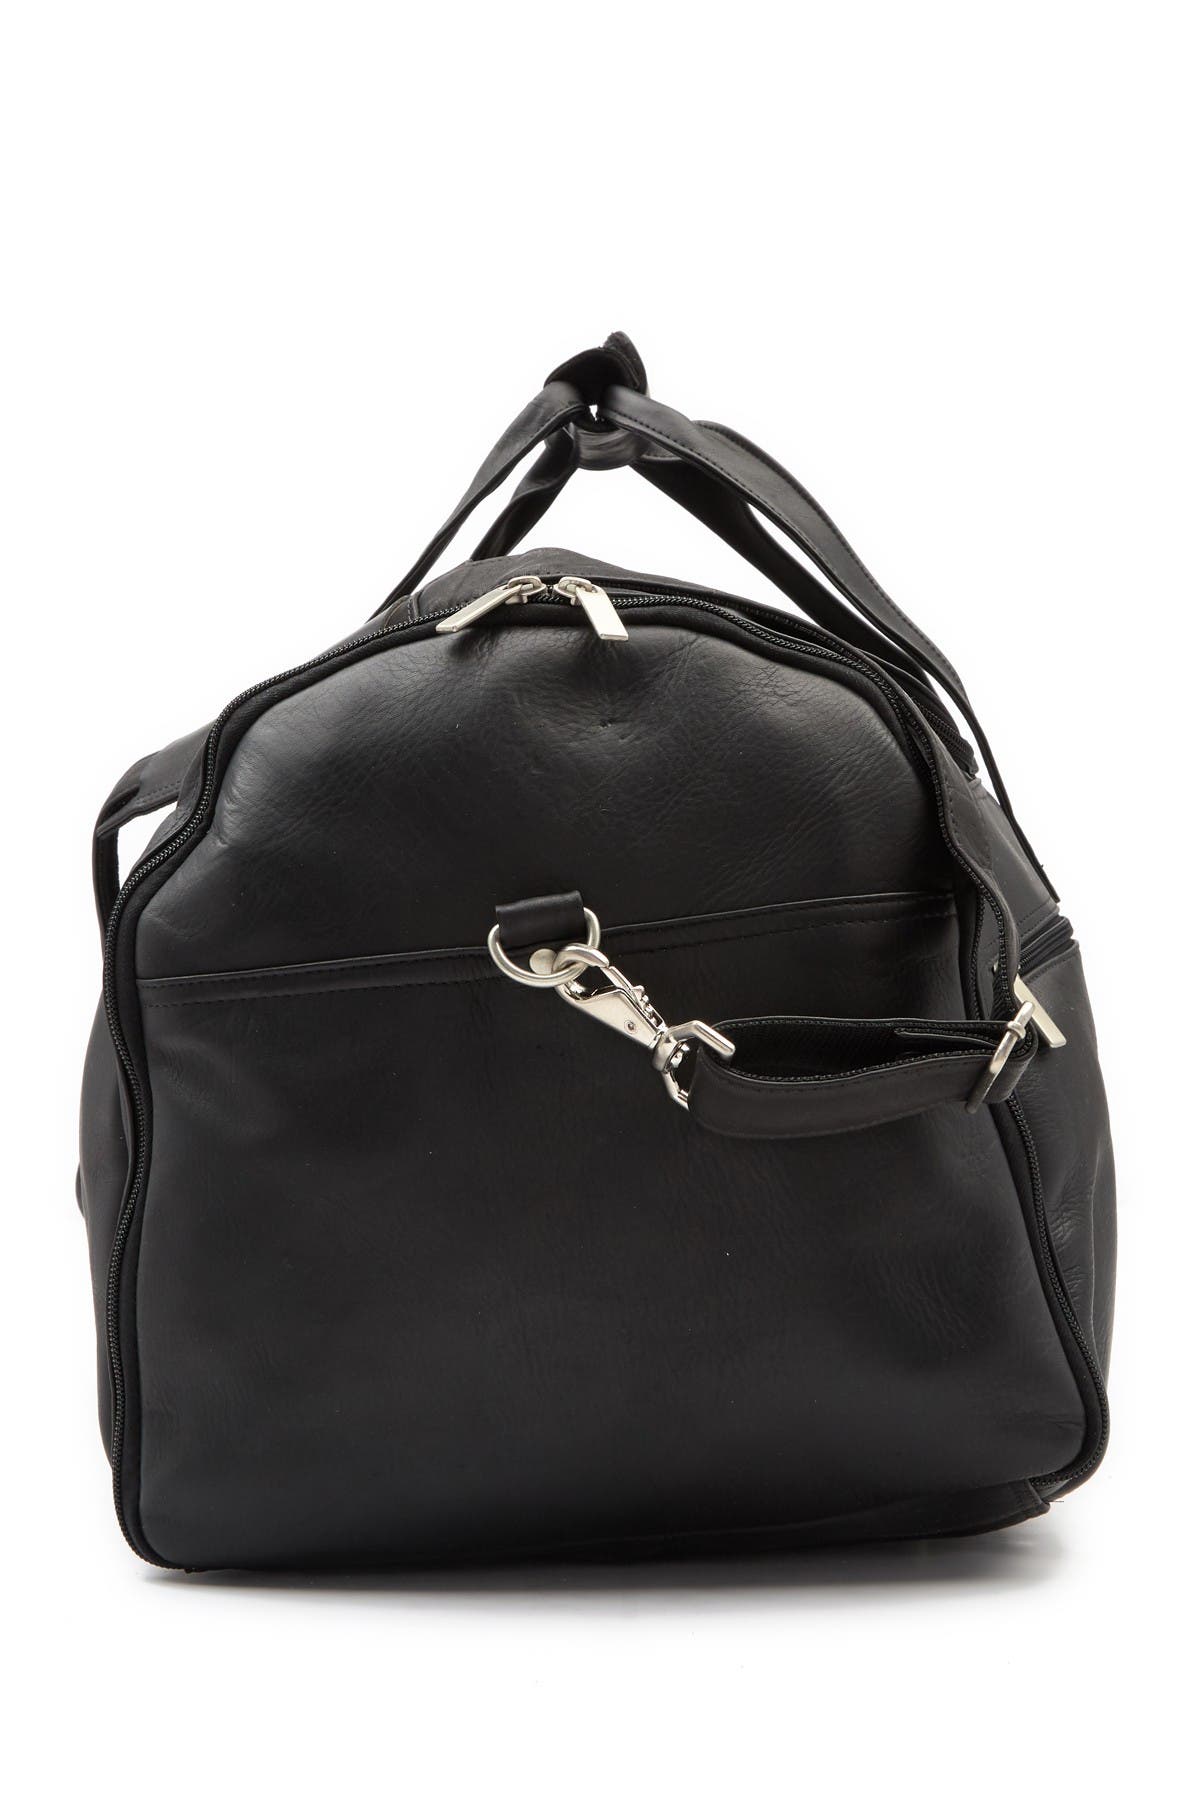 Black One Size Handbag David King & Co